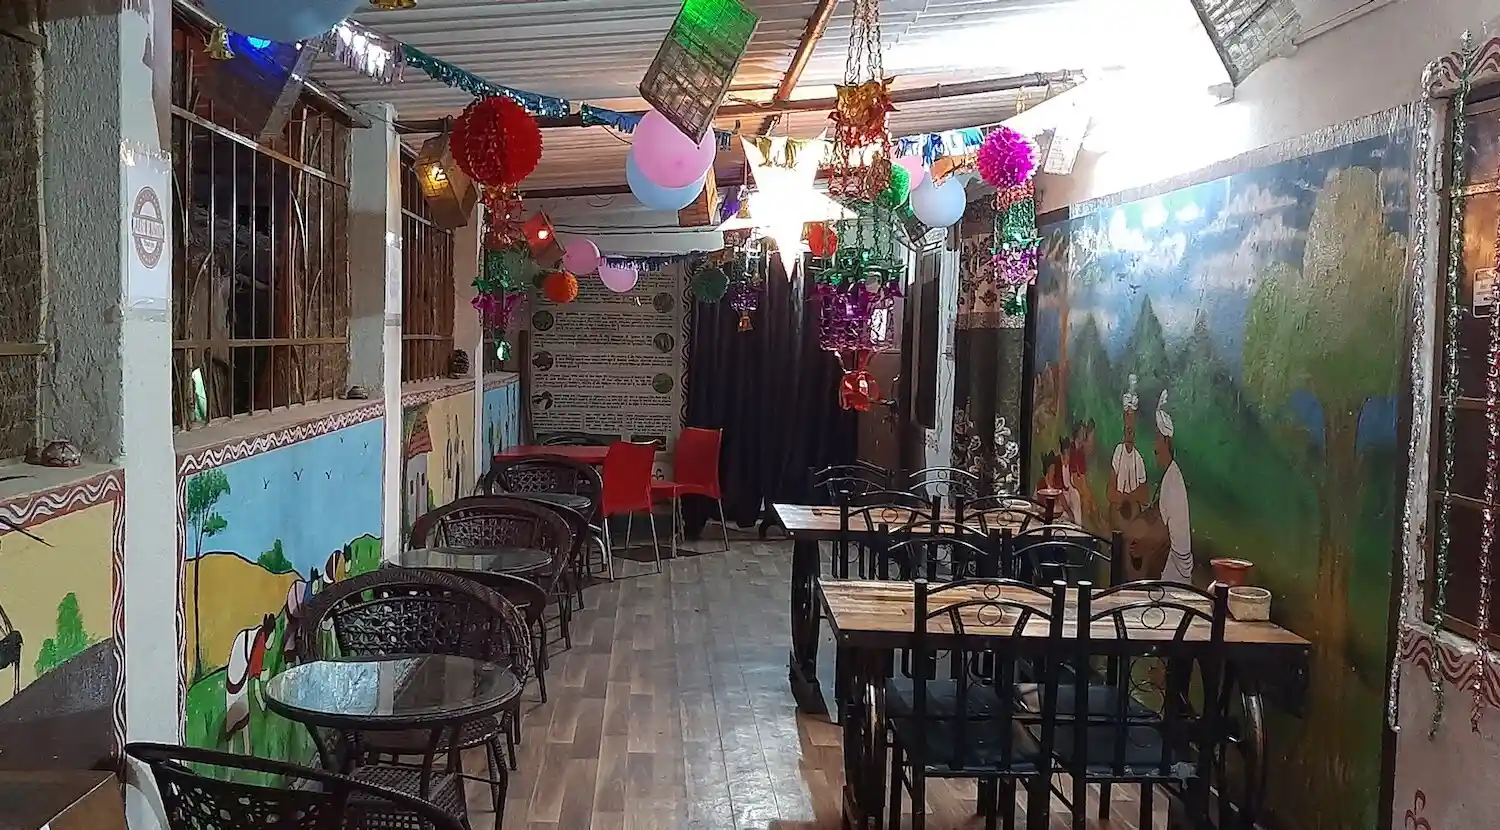 Ajam Emba's restaurant space